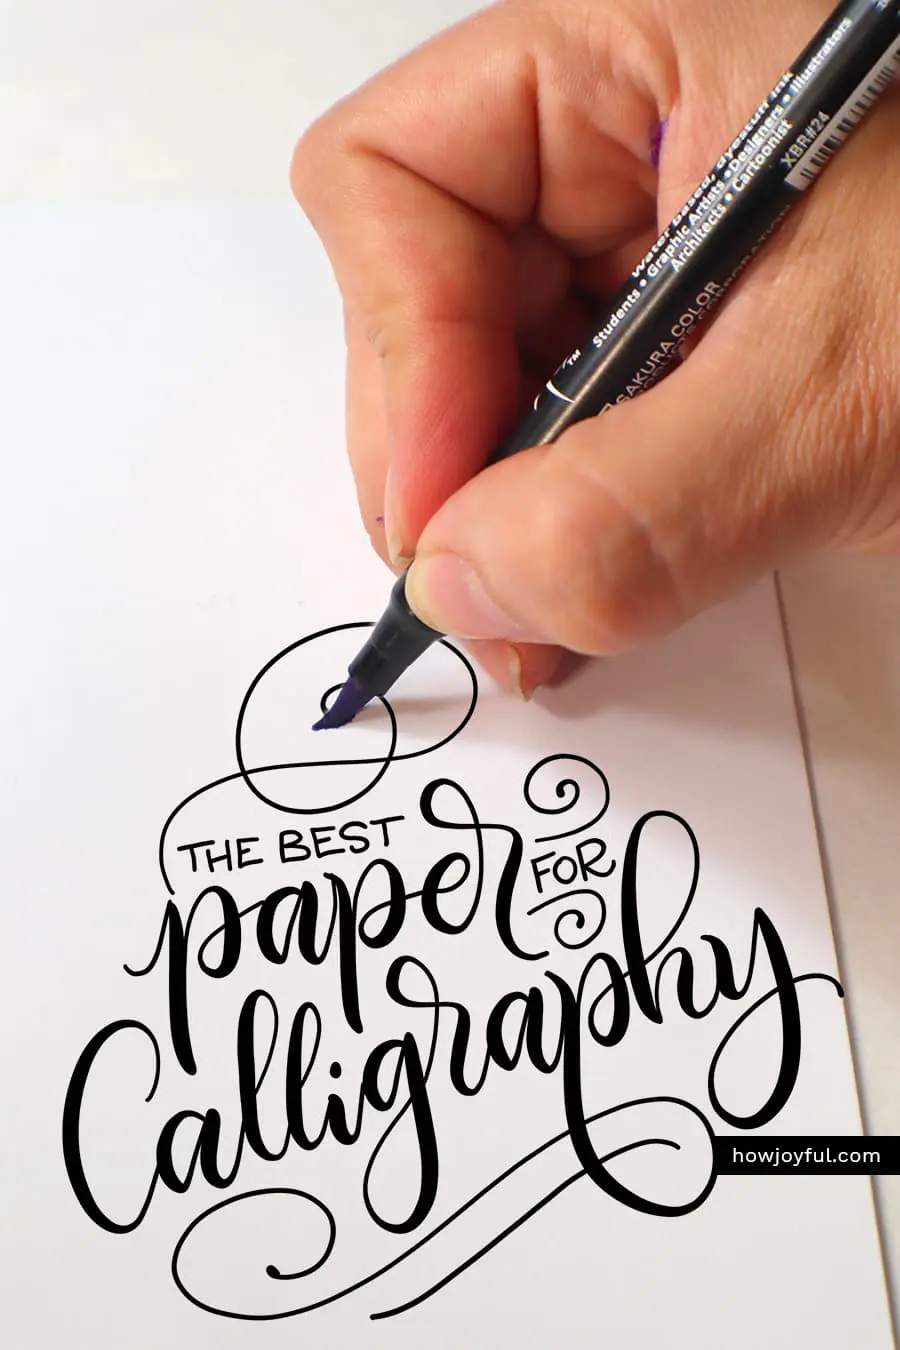 9 Best Brush Pens For Calligraphy